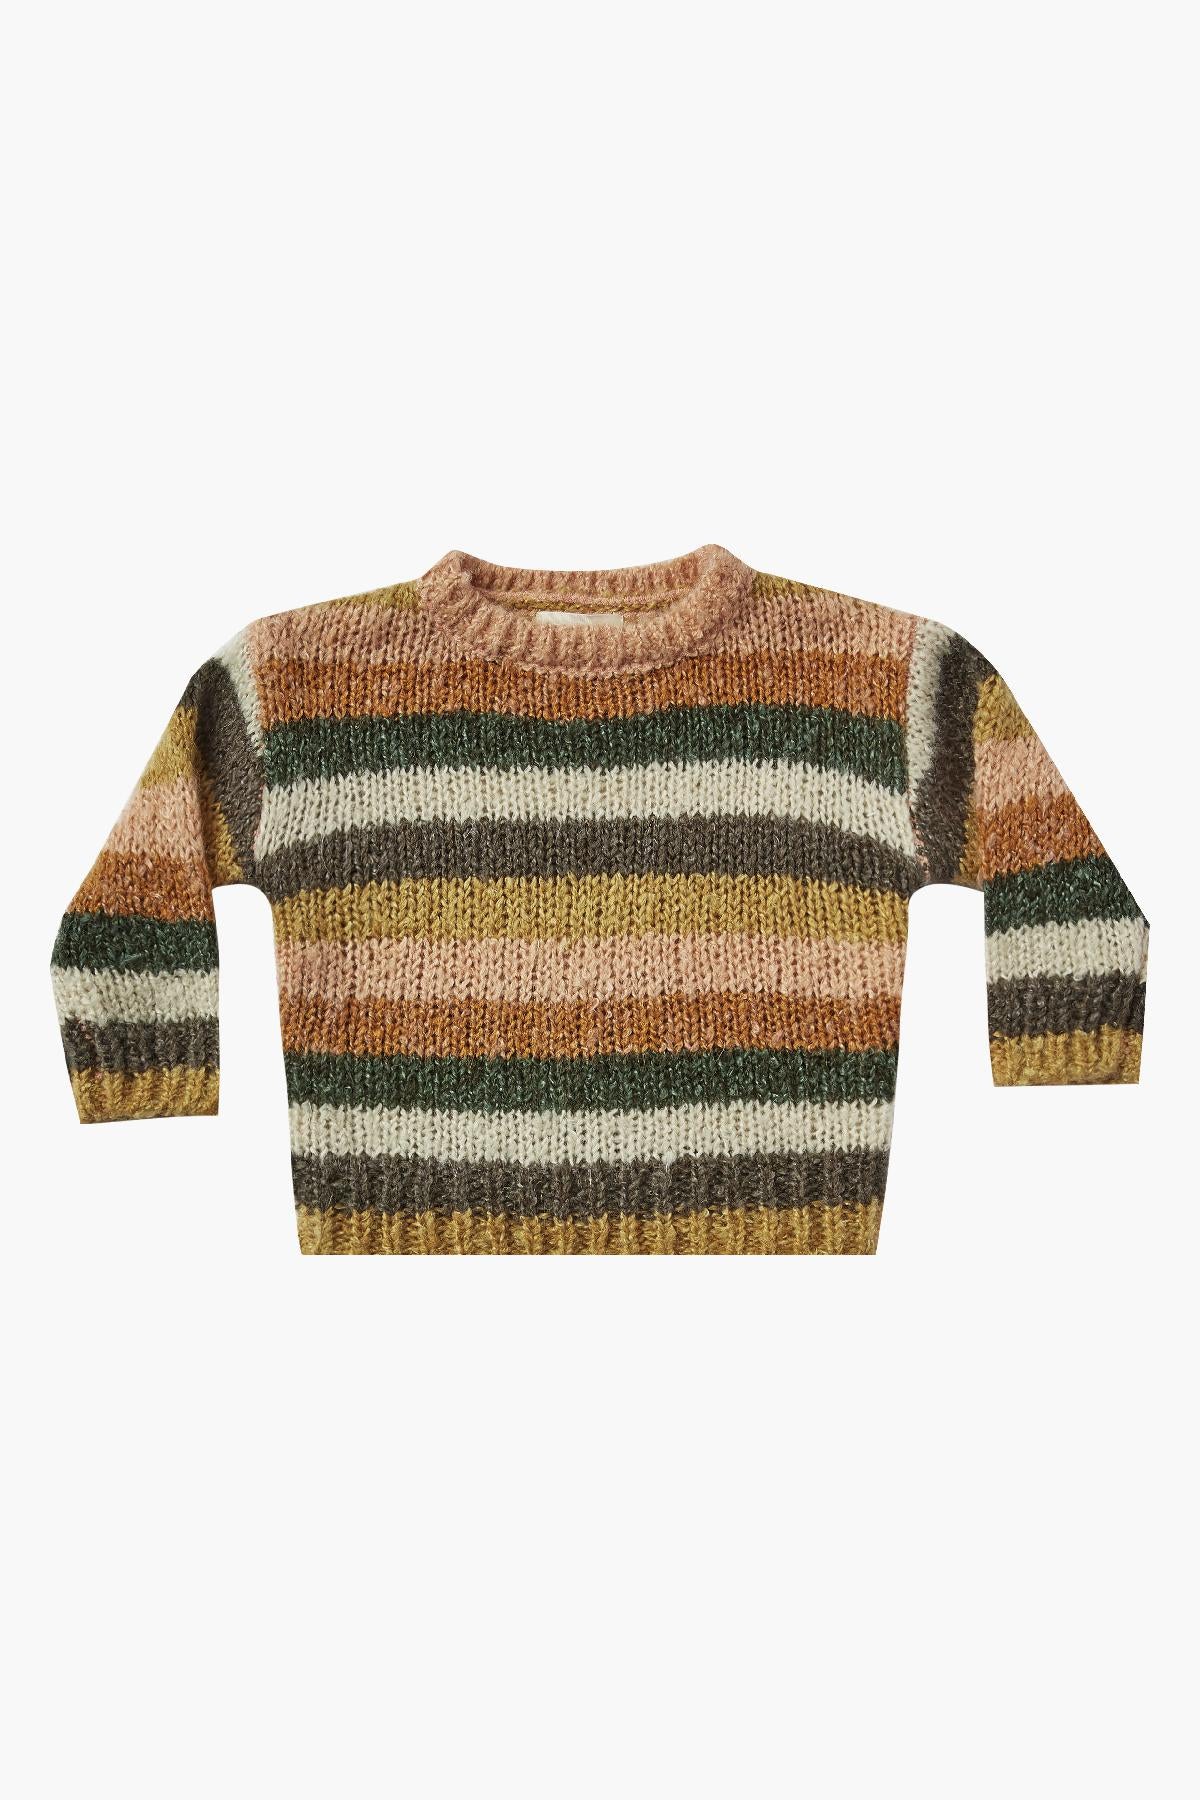 Rylee + Cru Stripe Aspen Baby Sweater (Size 6/12M left) – Mini Ruby